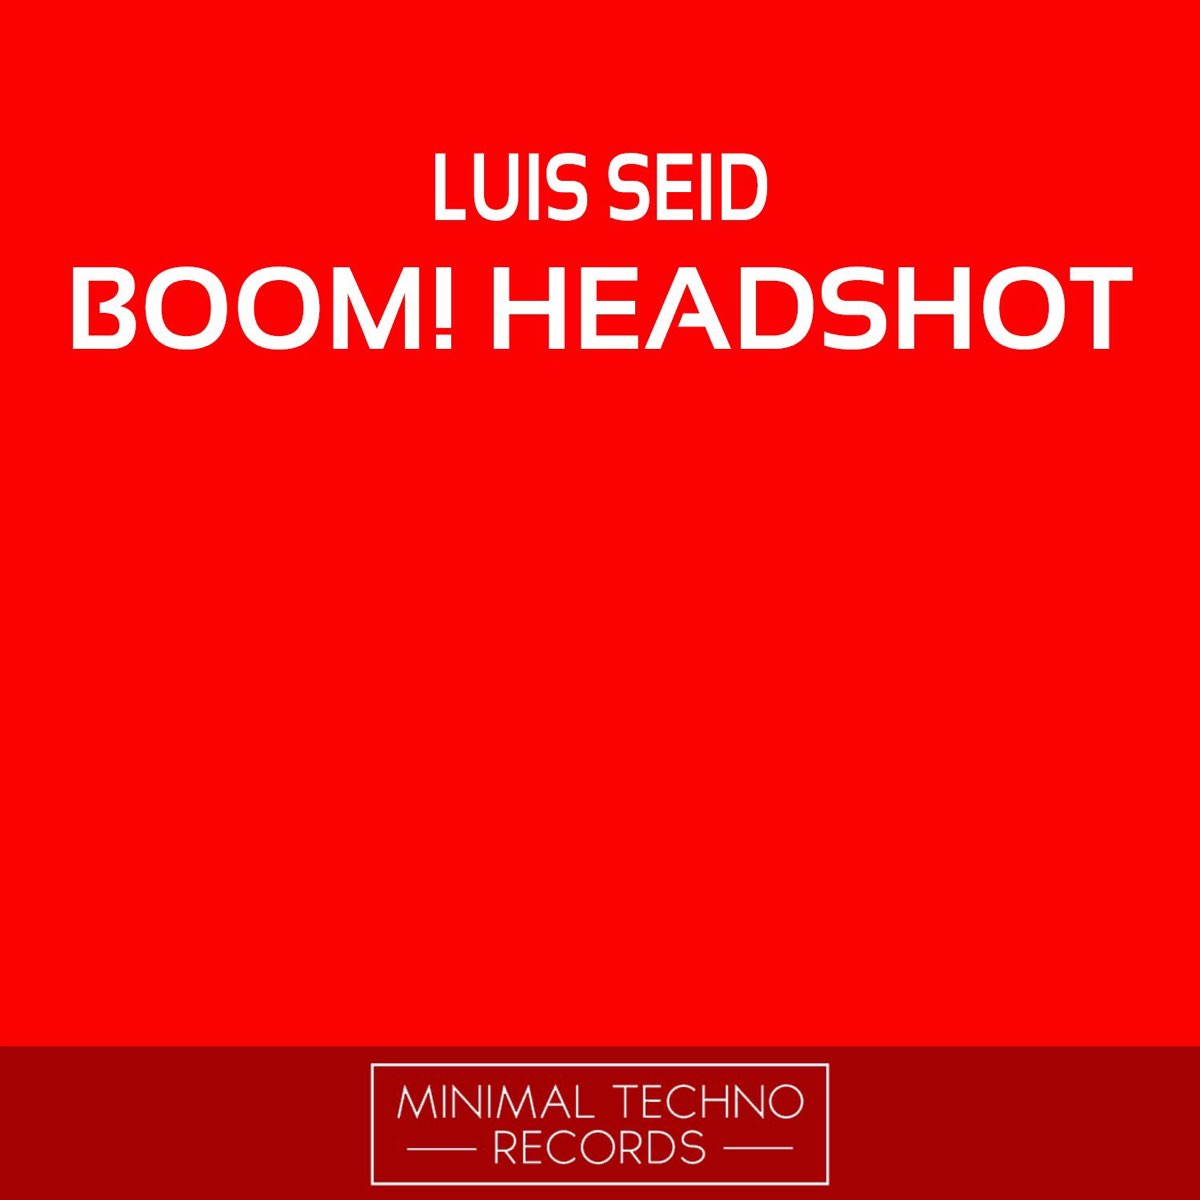 boom headshot logo